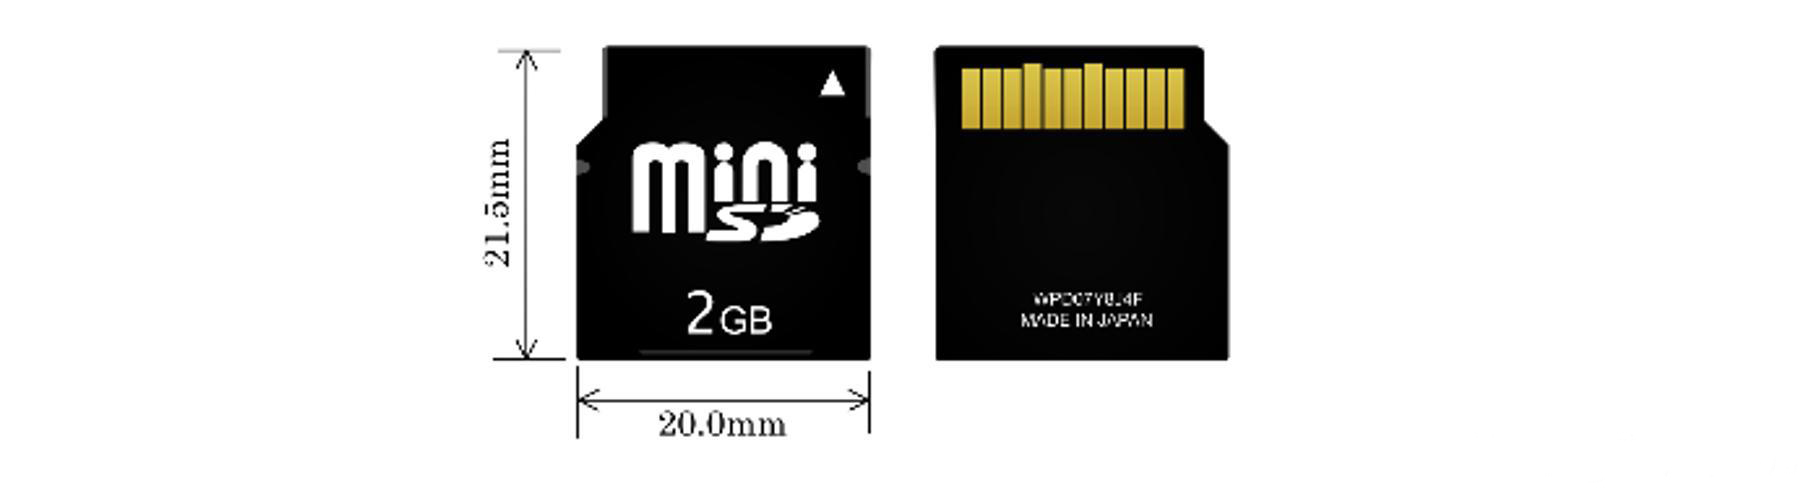 MiniSD card size